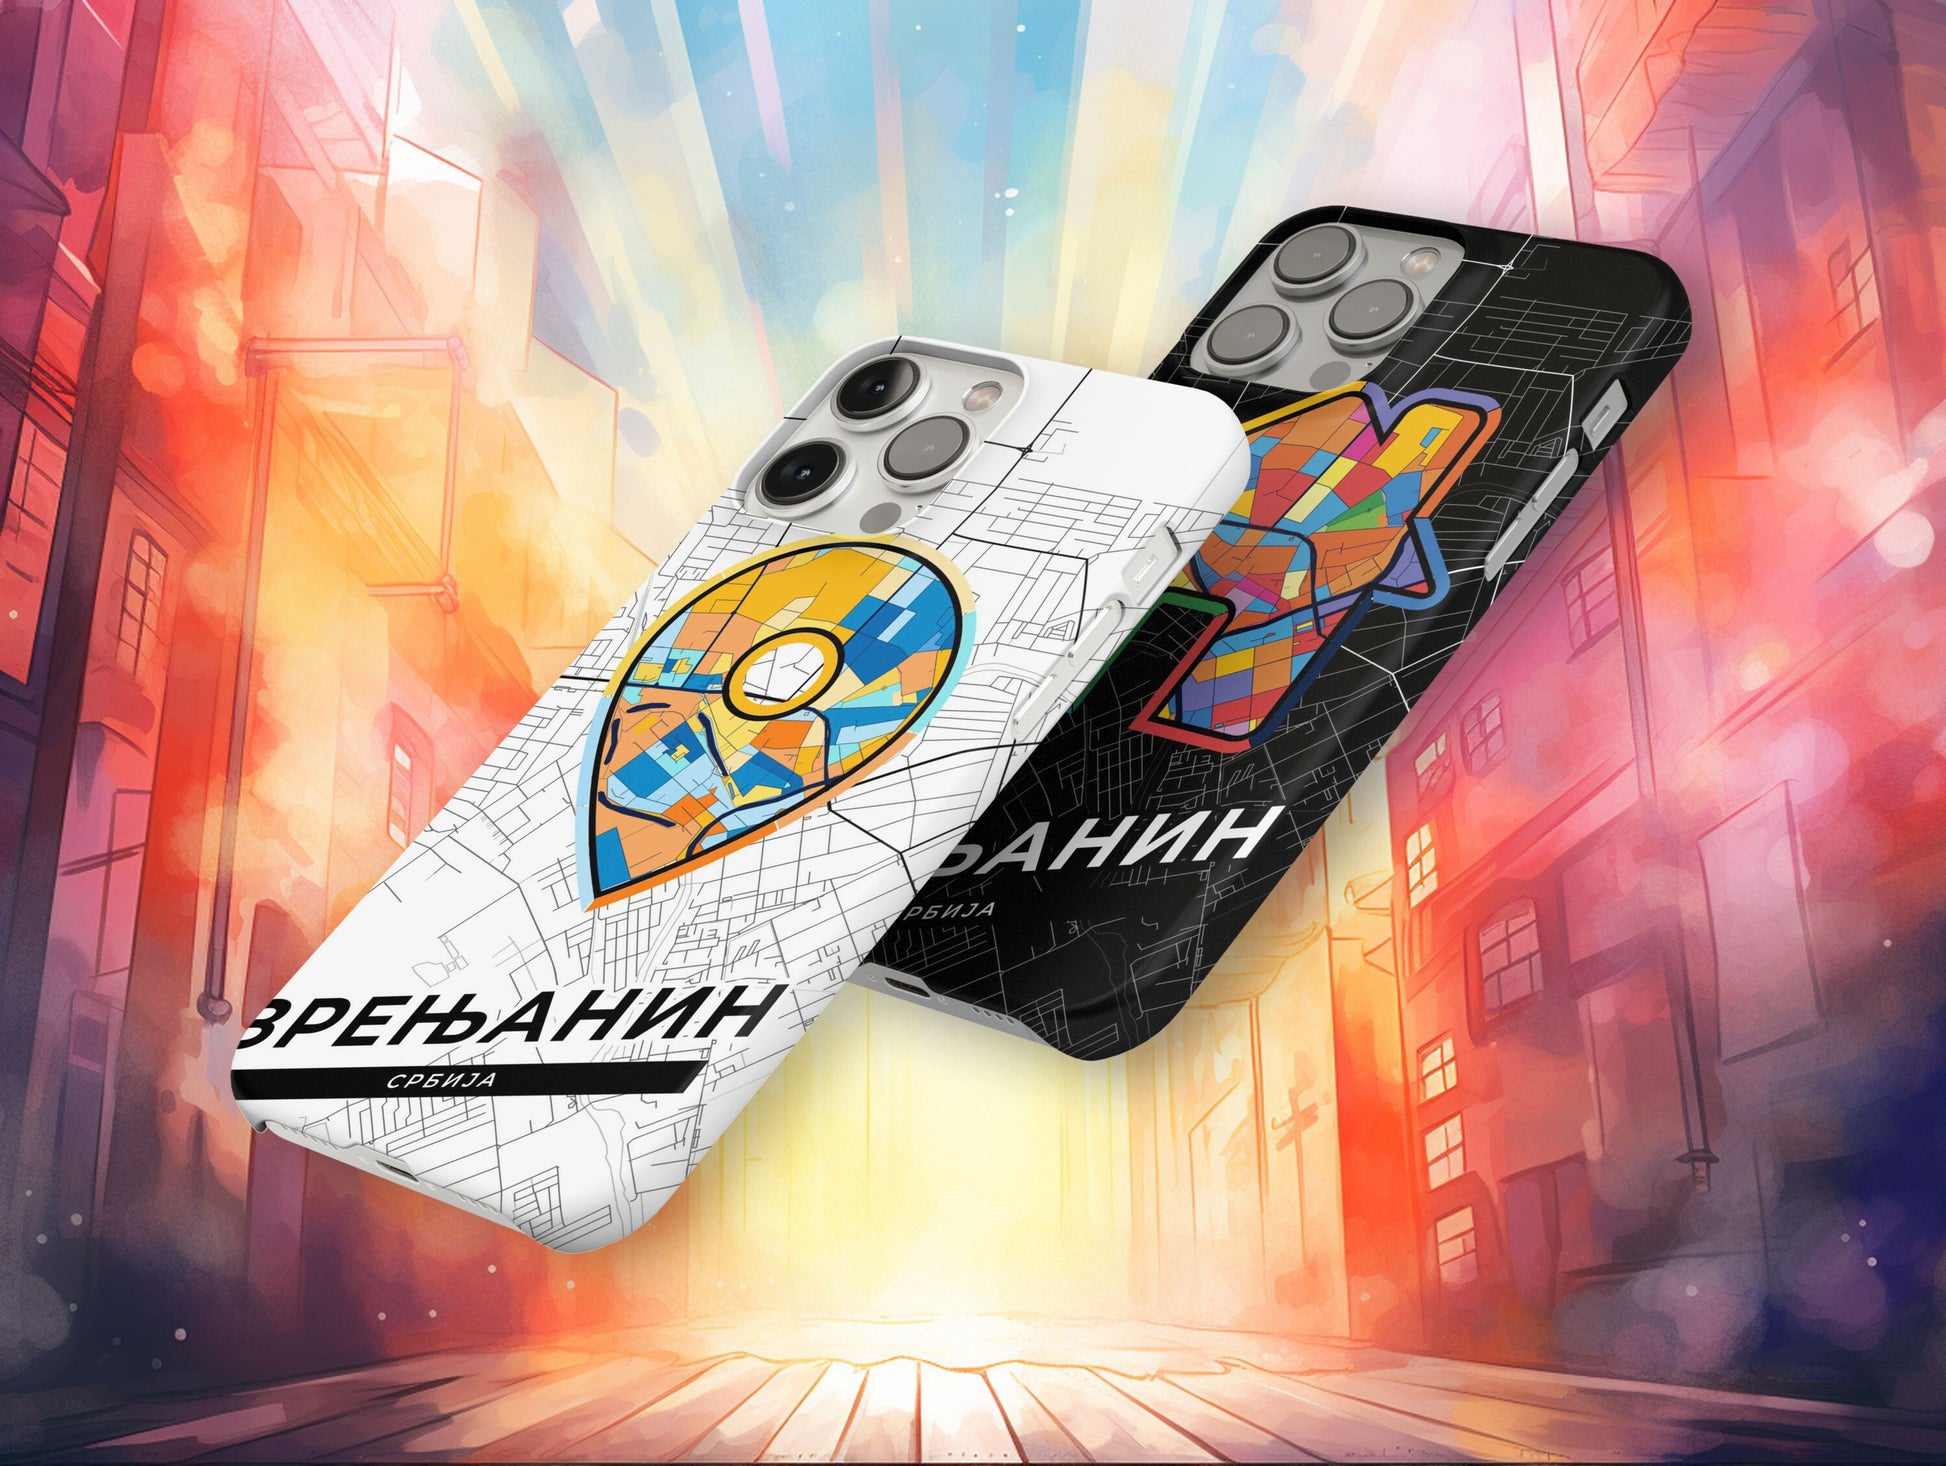 Zrenjanin Serbia slim phone case with colorful icon